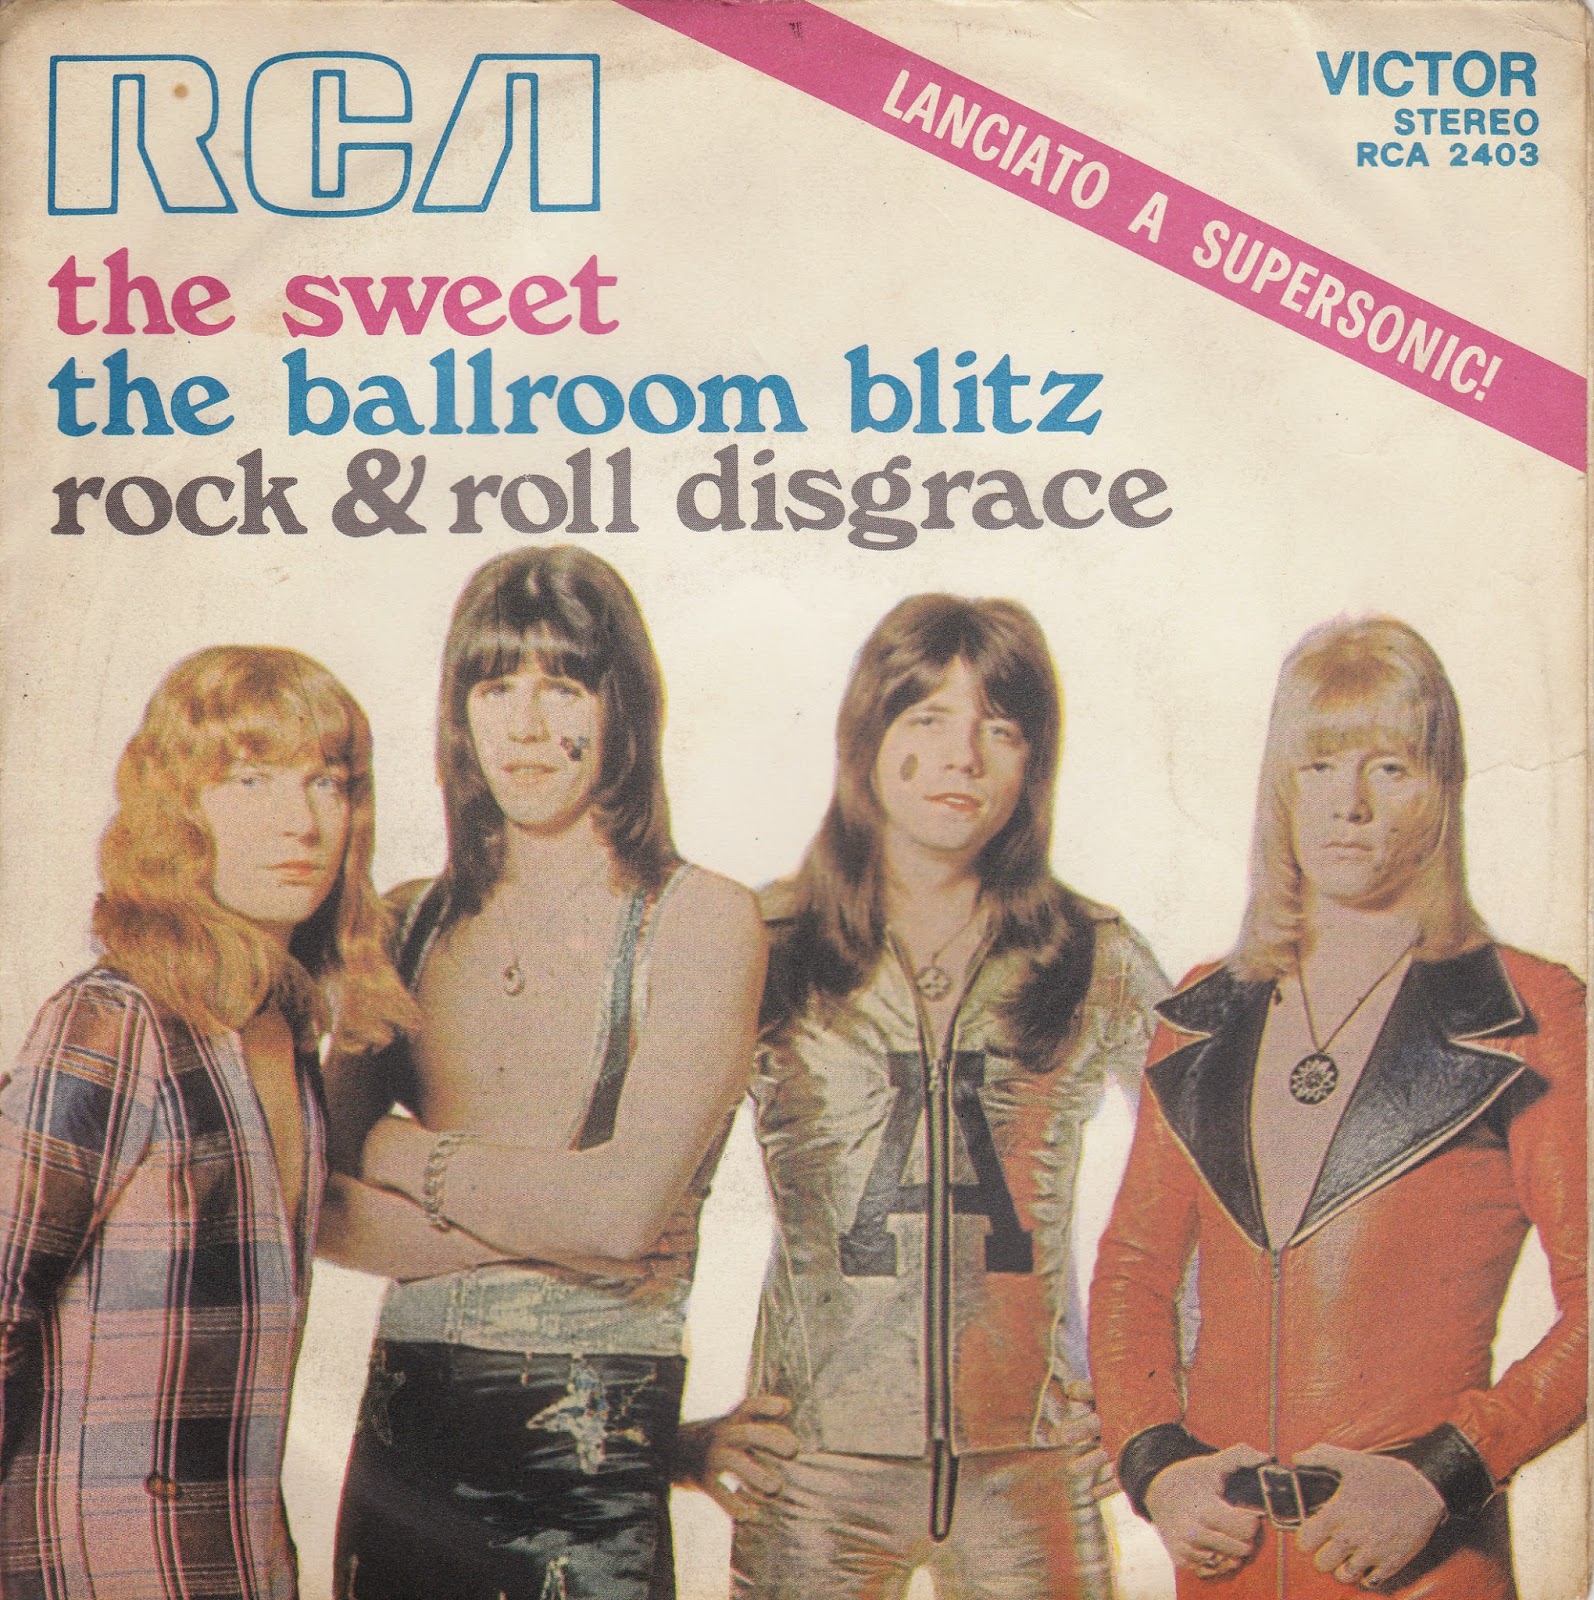 Sweet ballroom blitz. The Sweet - the Ballroom Blitz (1973). The Sweet - the Ballroom Blitz (1974). The Ballroom Blitz Sweet. Sweet.